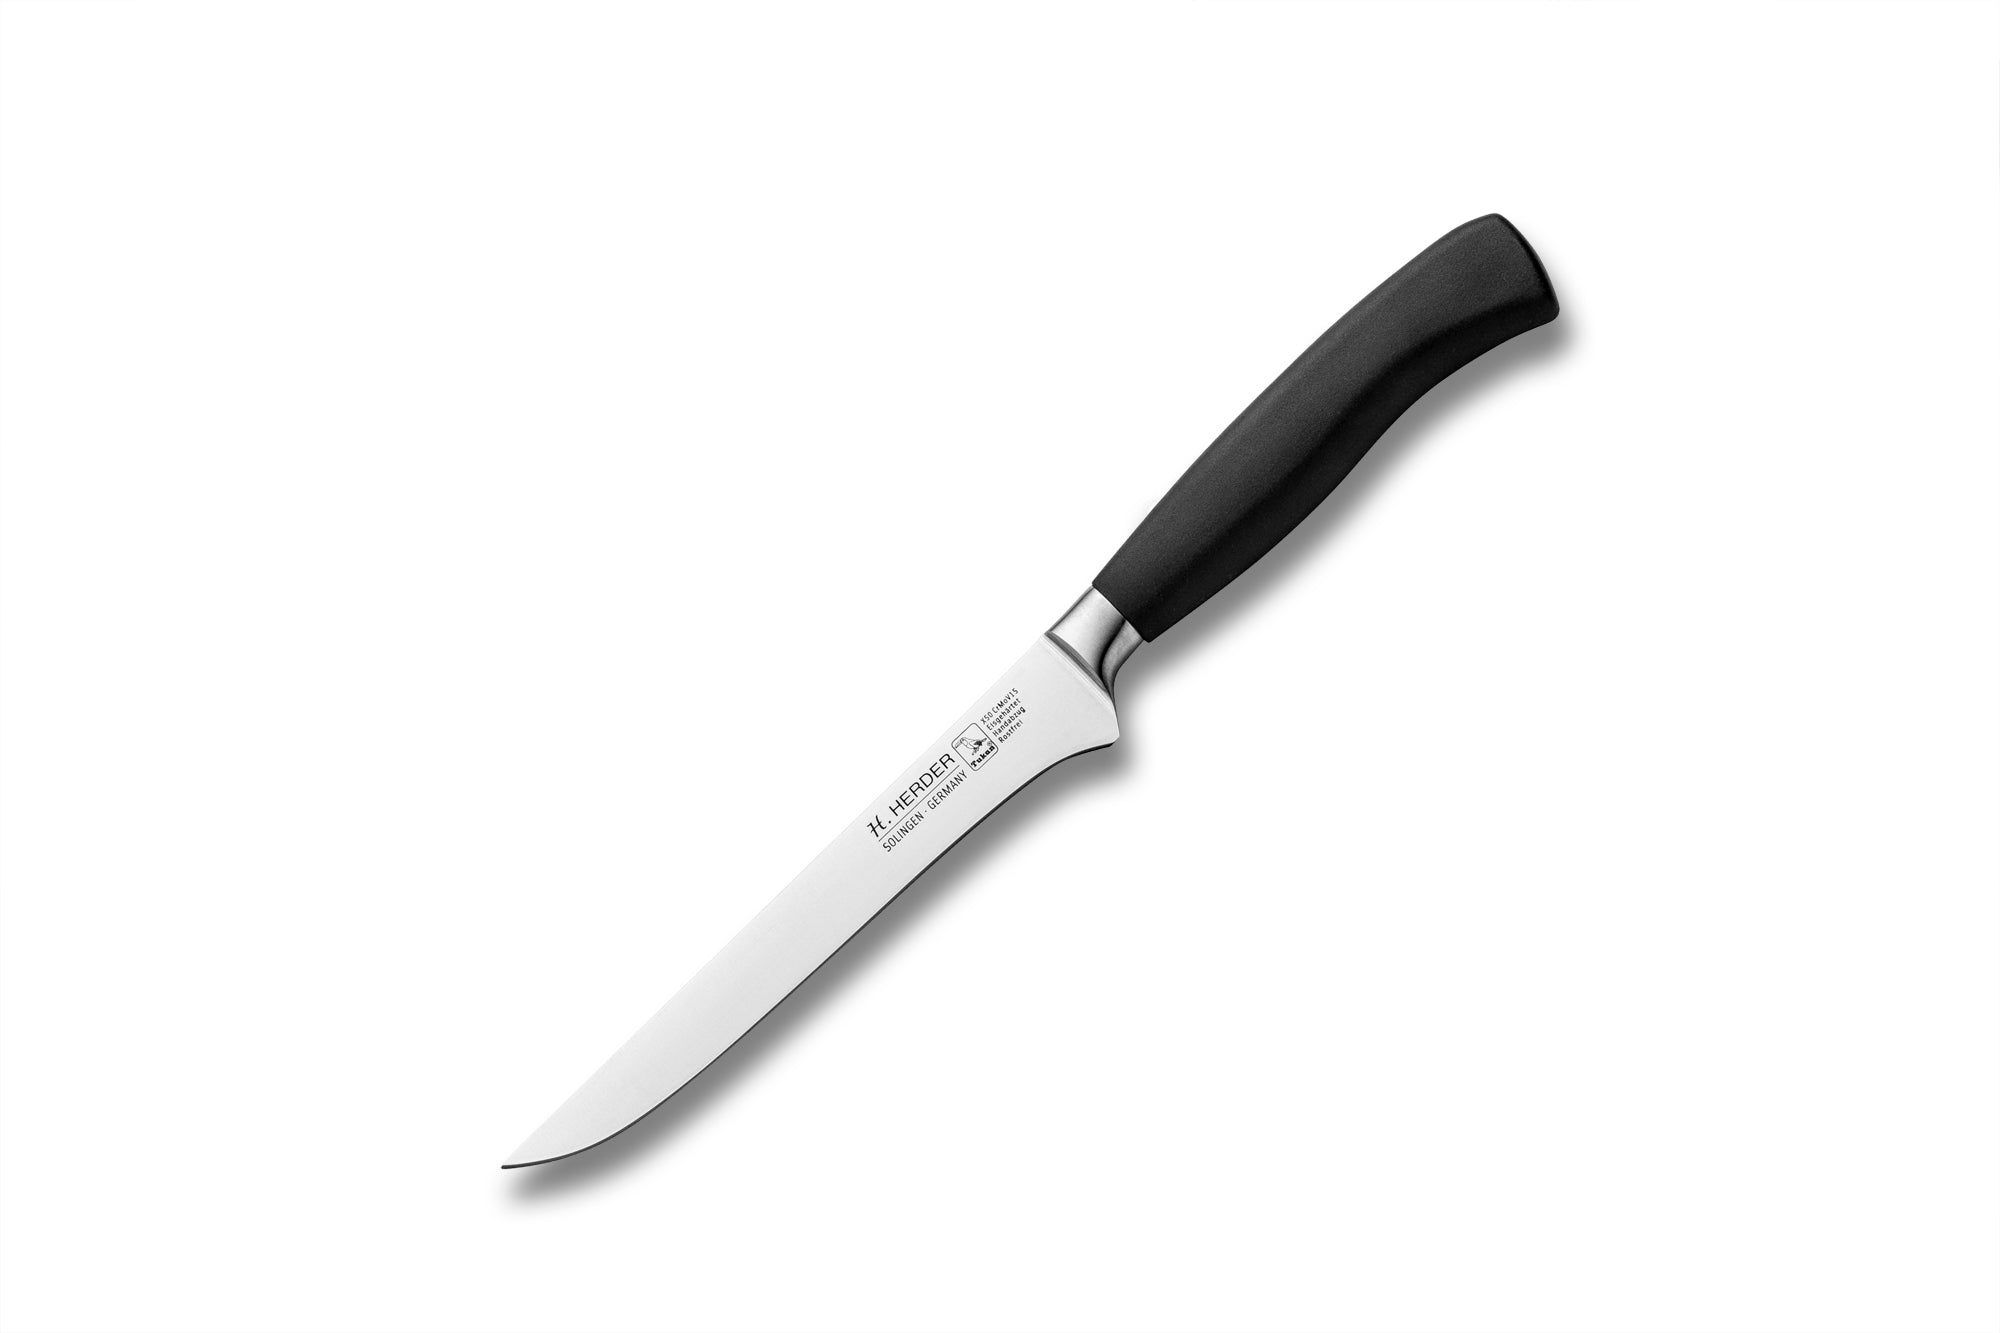 Cuchillo deshuesador Eterno Gastro, longitud de la hoja 16cm